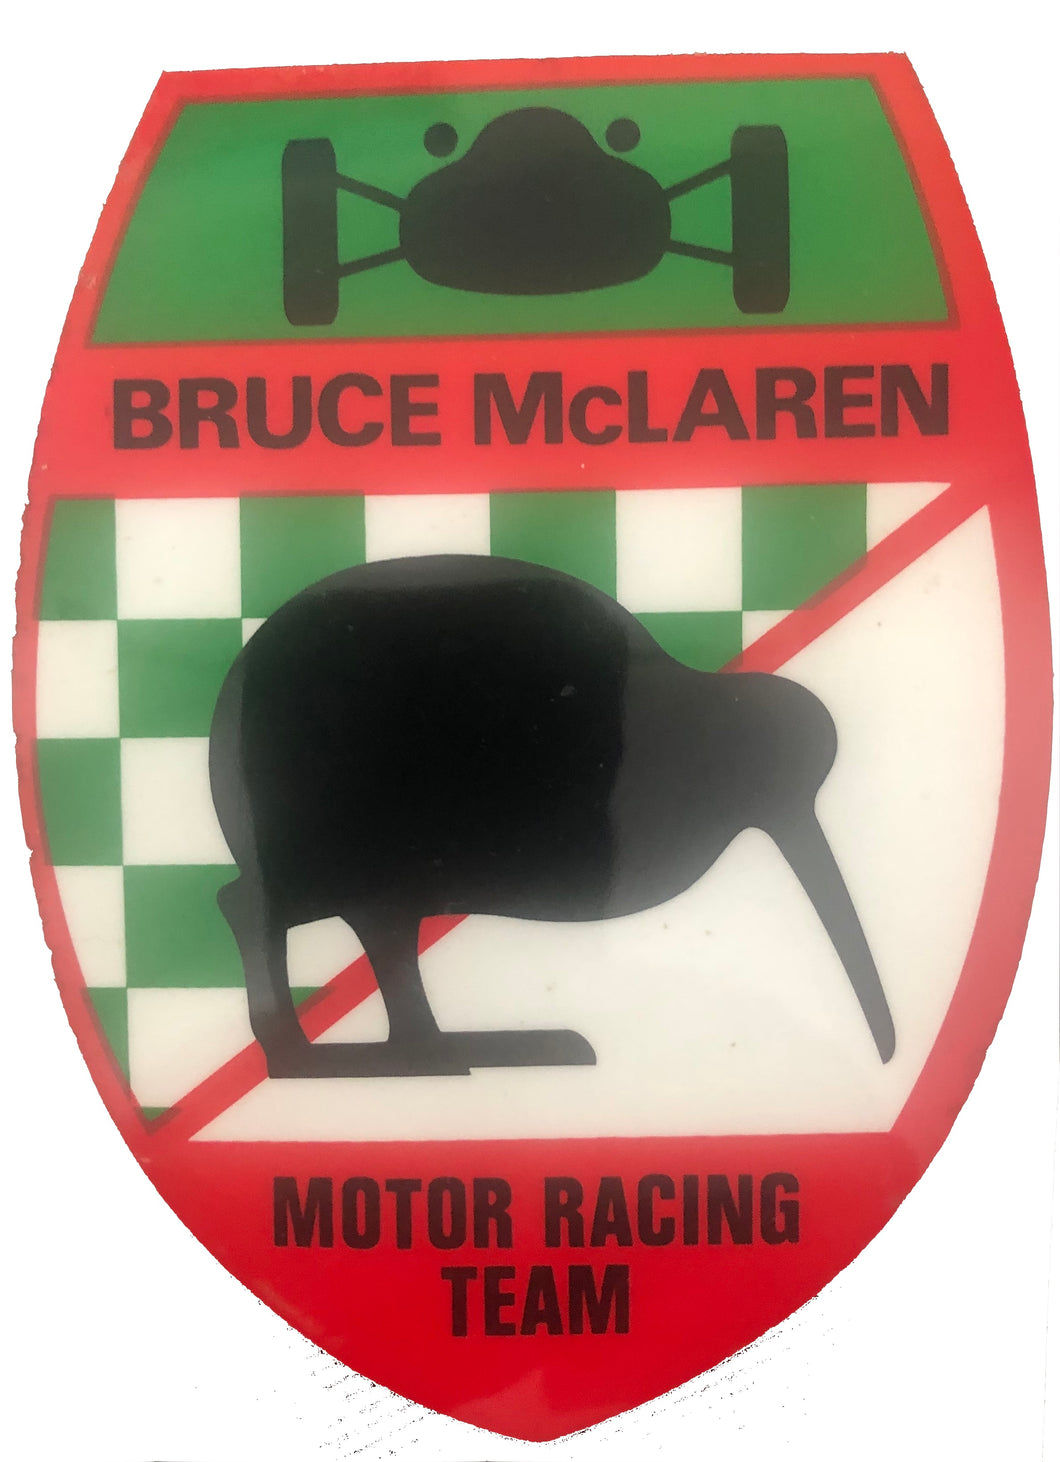 Bruce McLaren Motor Racing Team Nose Sticker